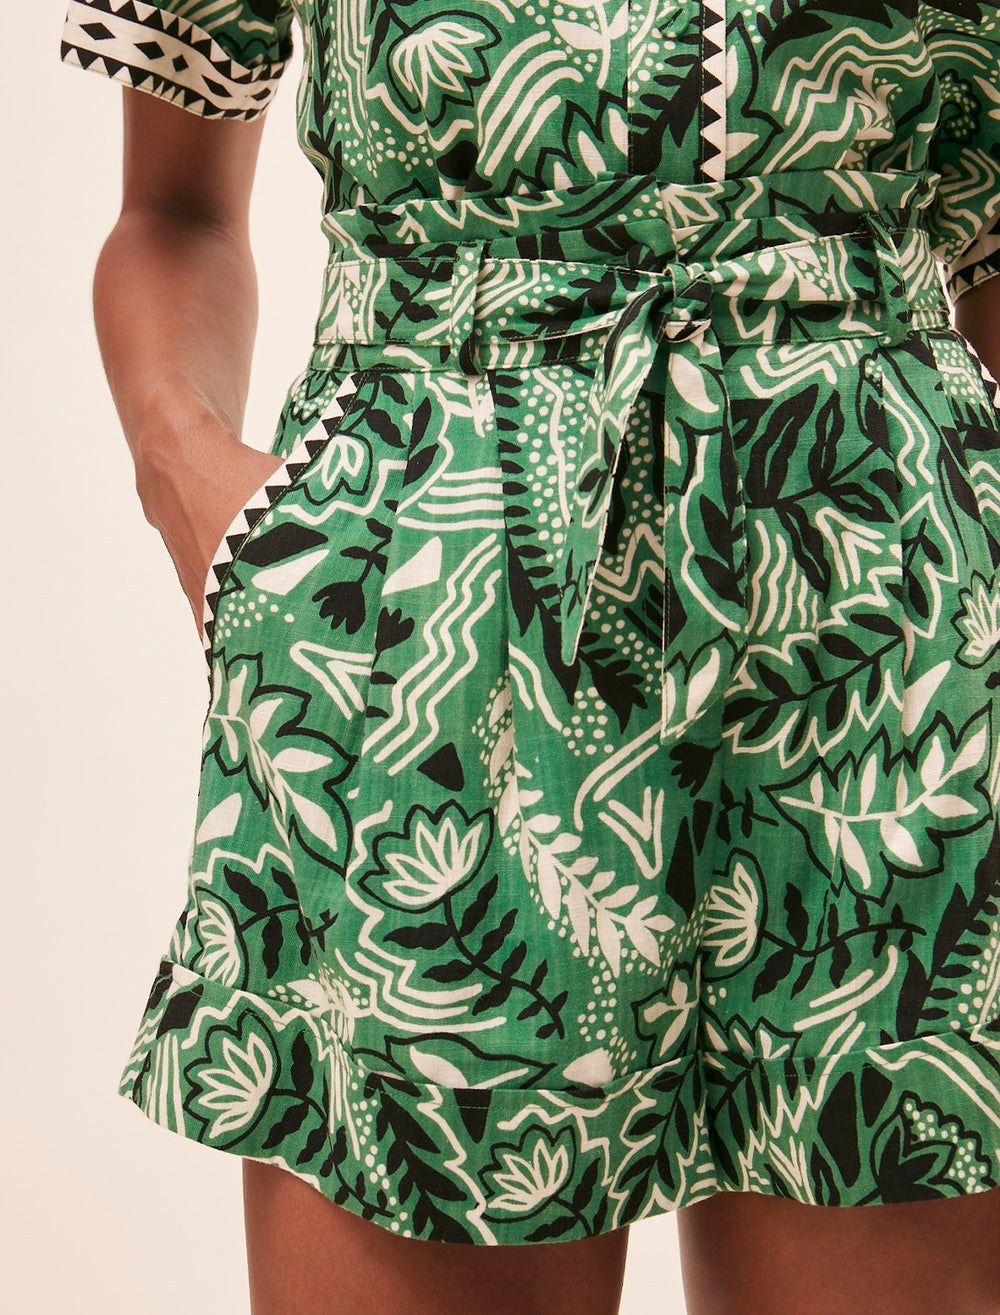 Model wearing Suncoo Paris' banny shorts in vert botanical.